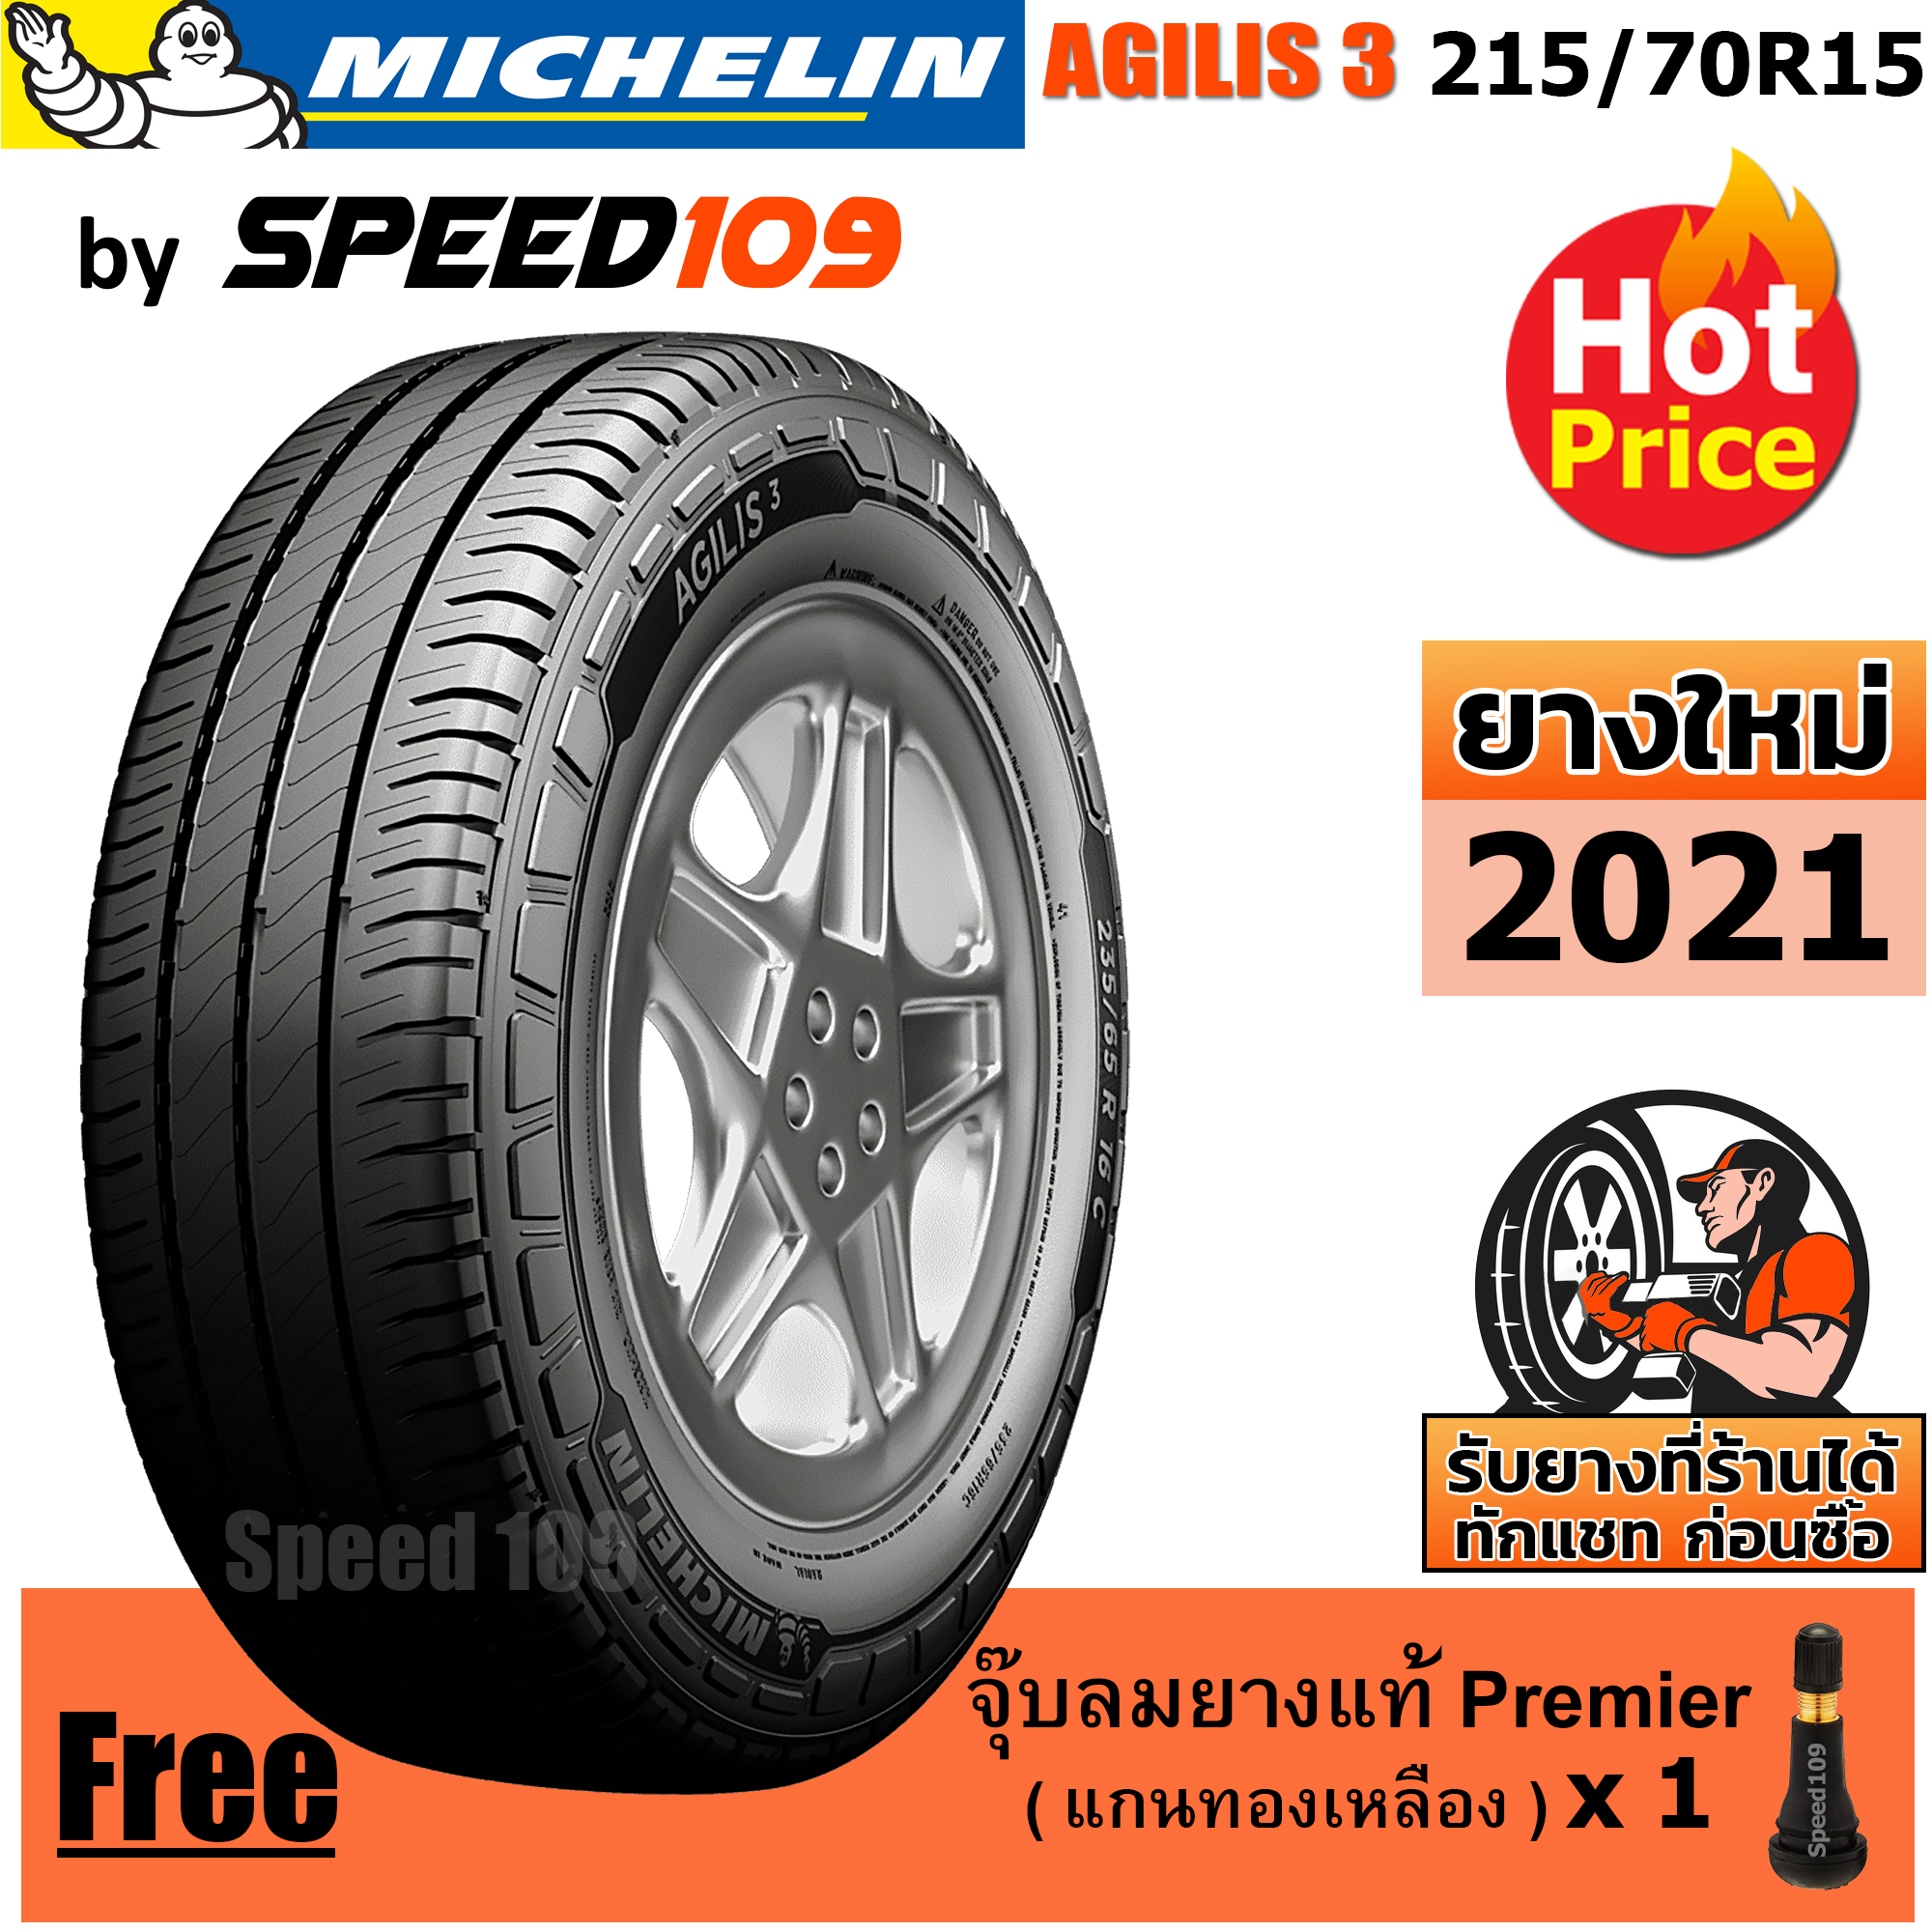 MICHELIN ยางรถยนต์ ขอบ 15 ขนาด 215/70R15 รุ่น AGILIS 3 - 1 เส้น (ปี 2021)